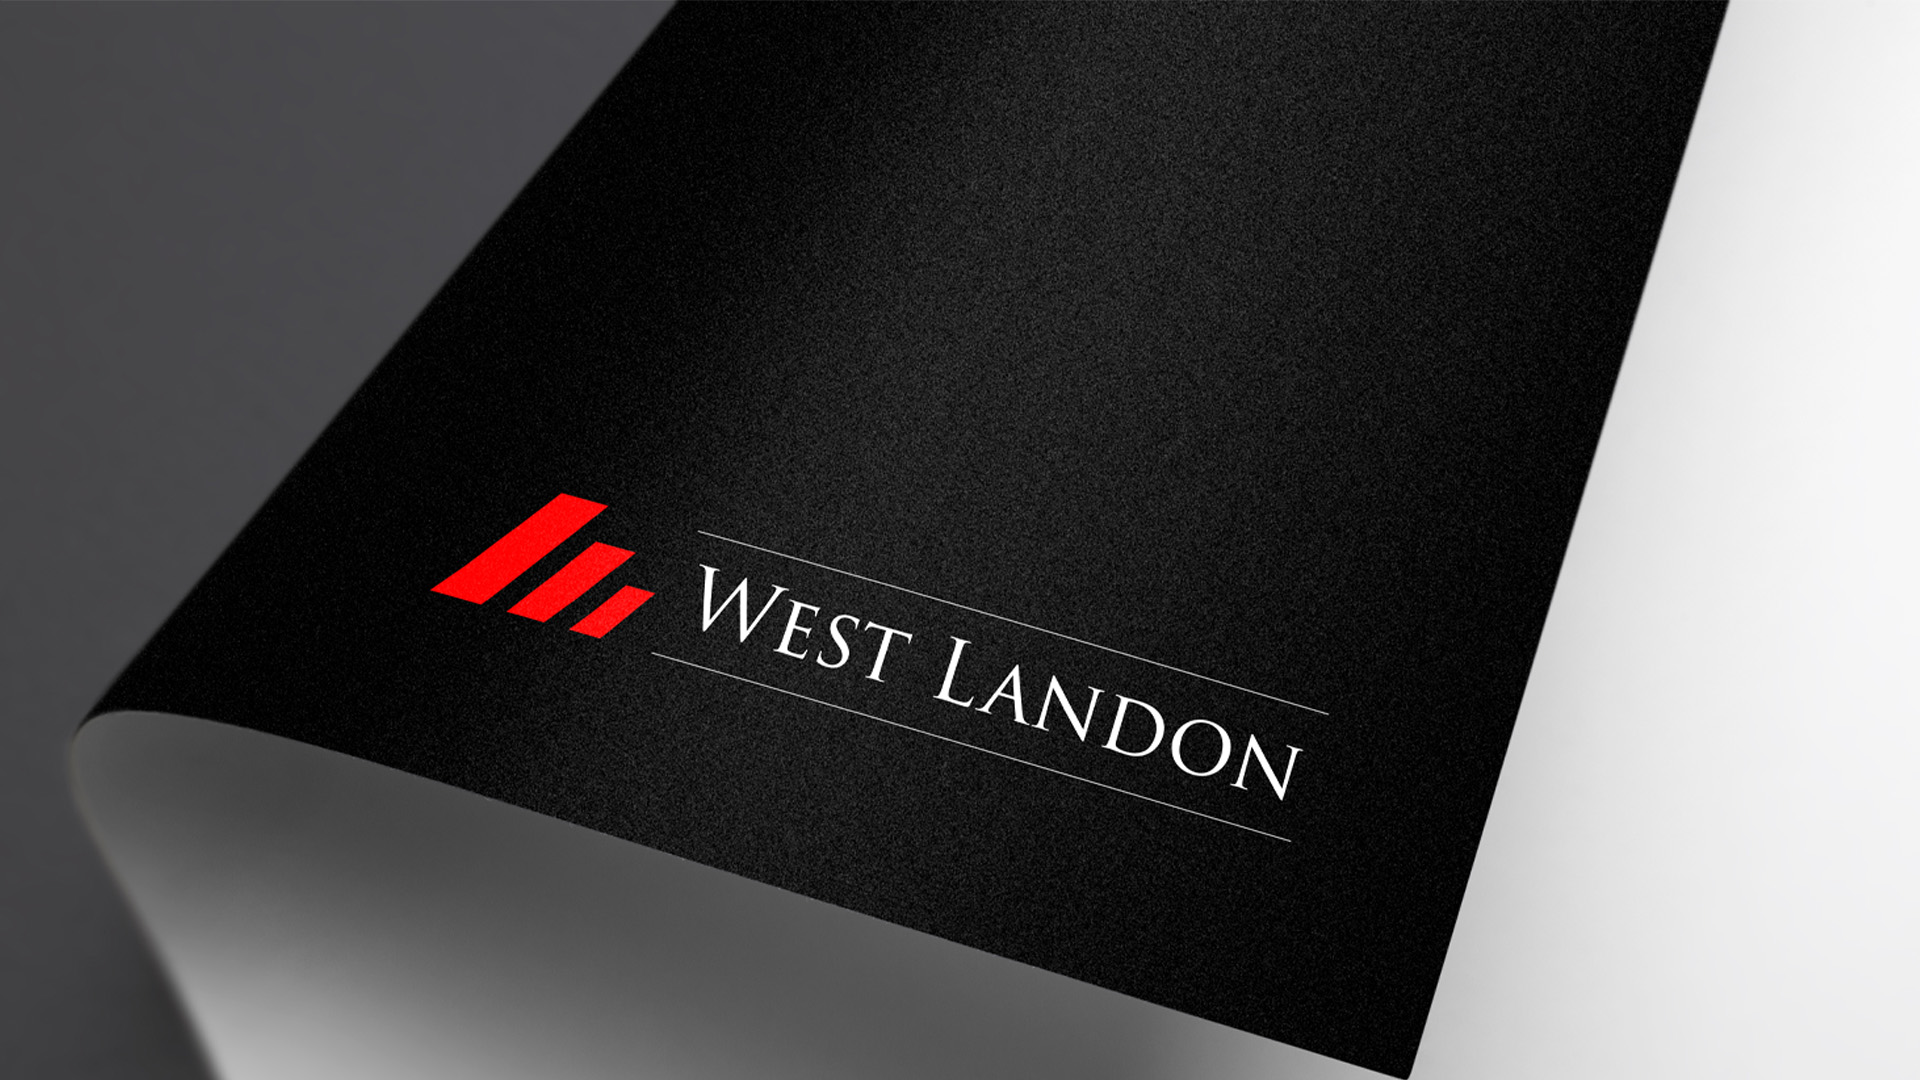 West Landon logo printed on a black book cover.